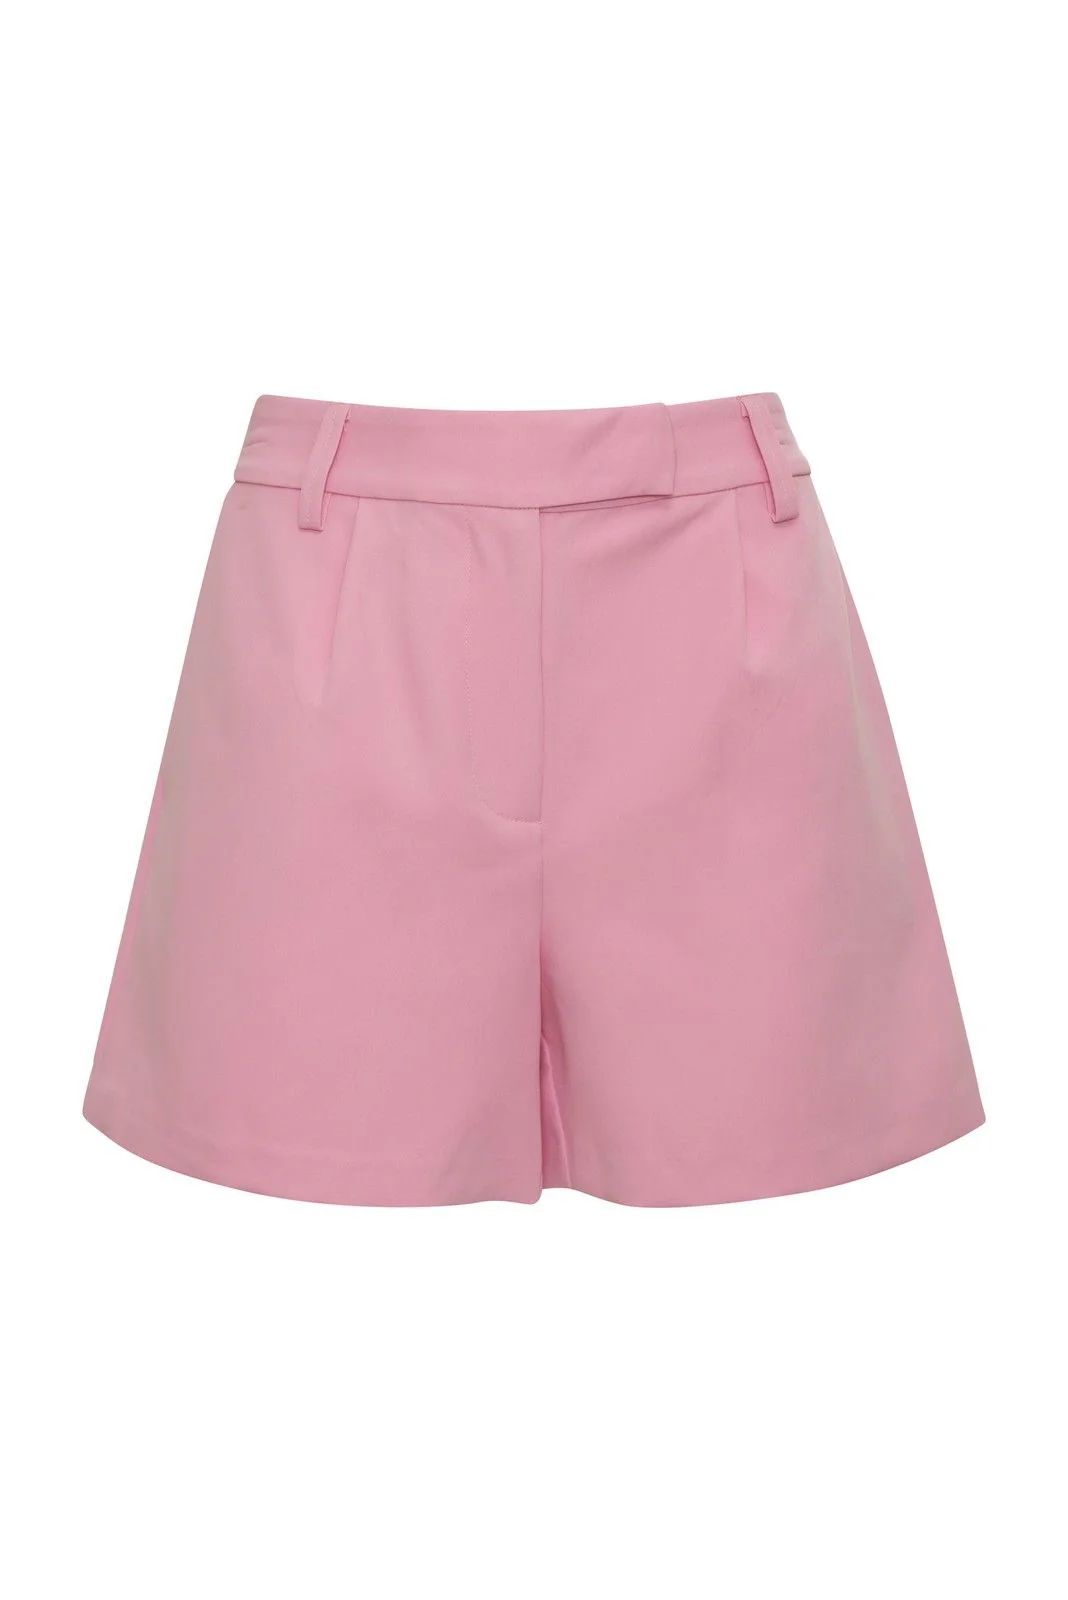 Halle Semi High Rise Short Pink No.3 | Sanctuary Clothing